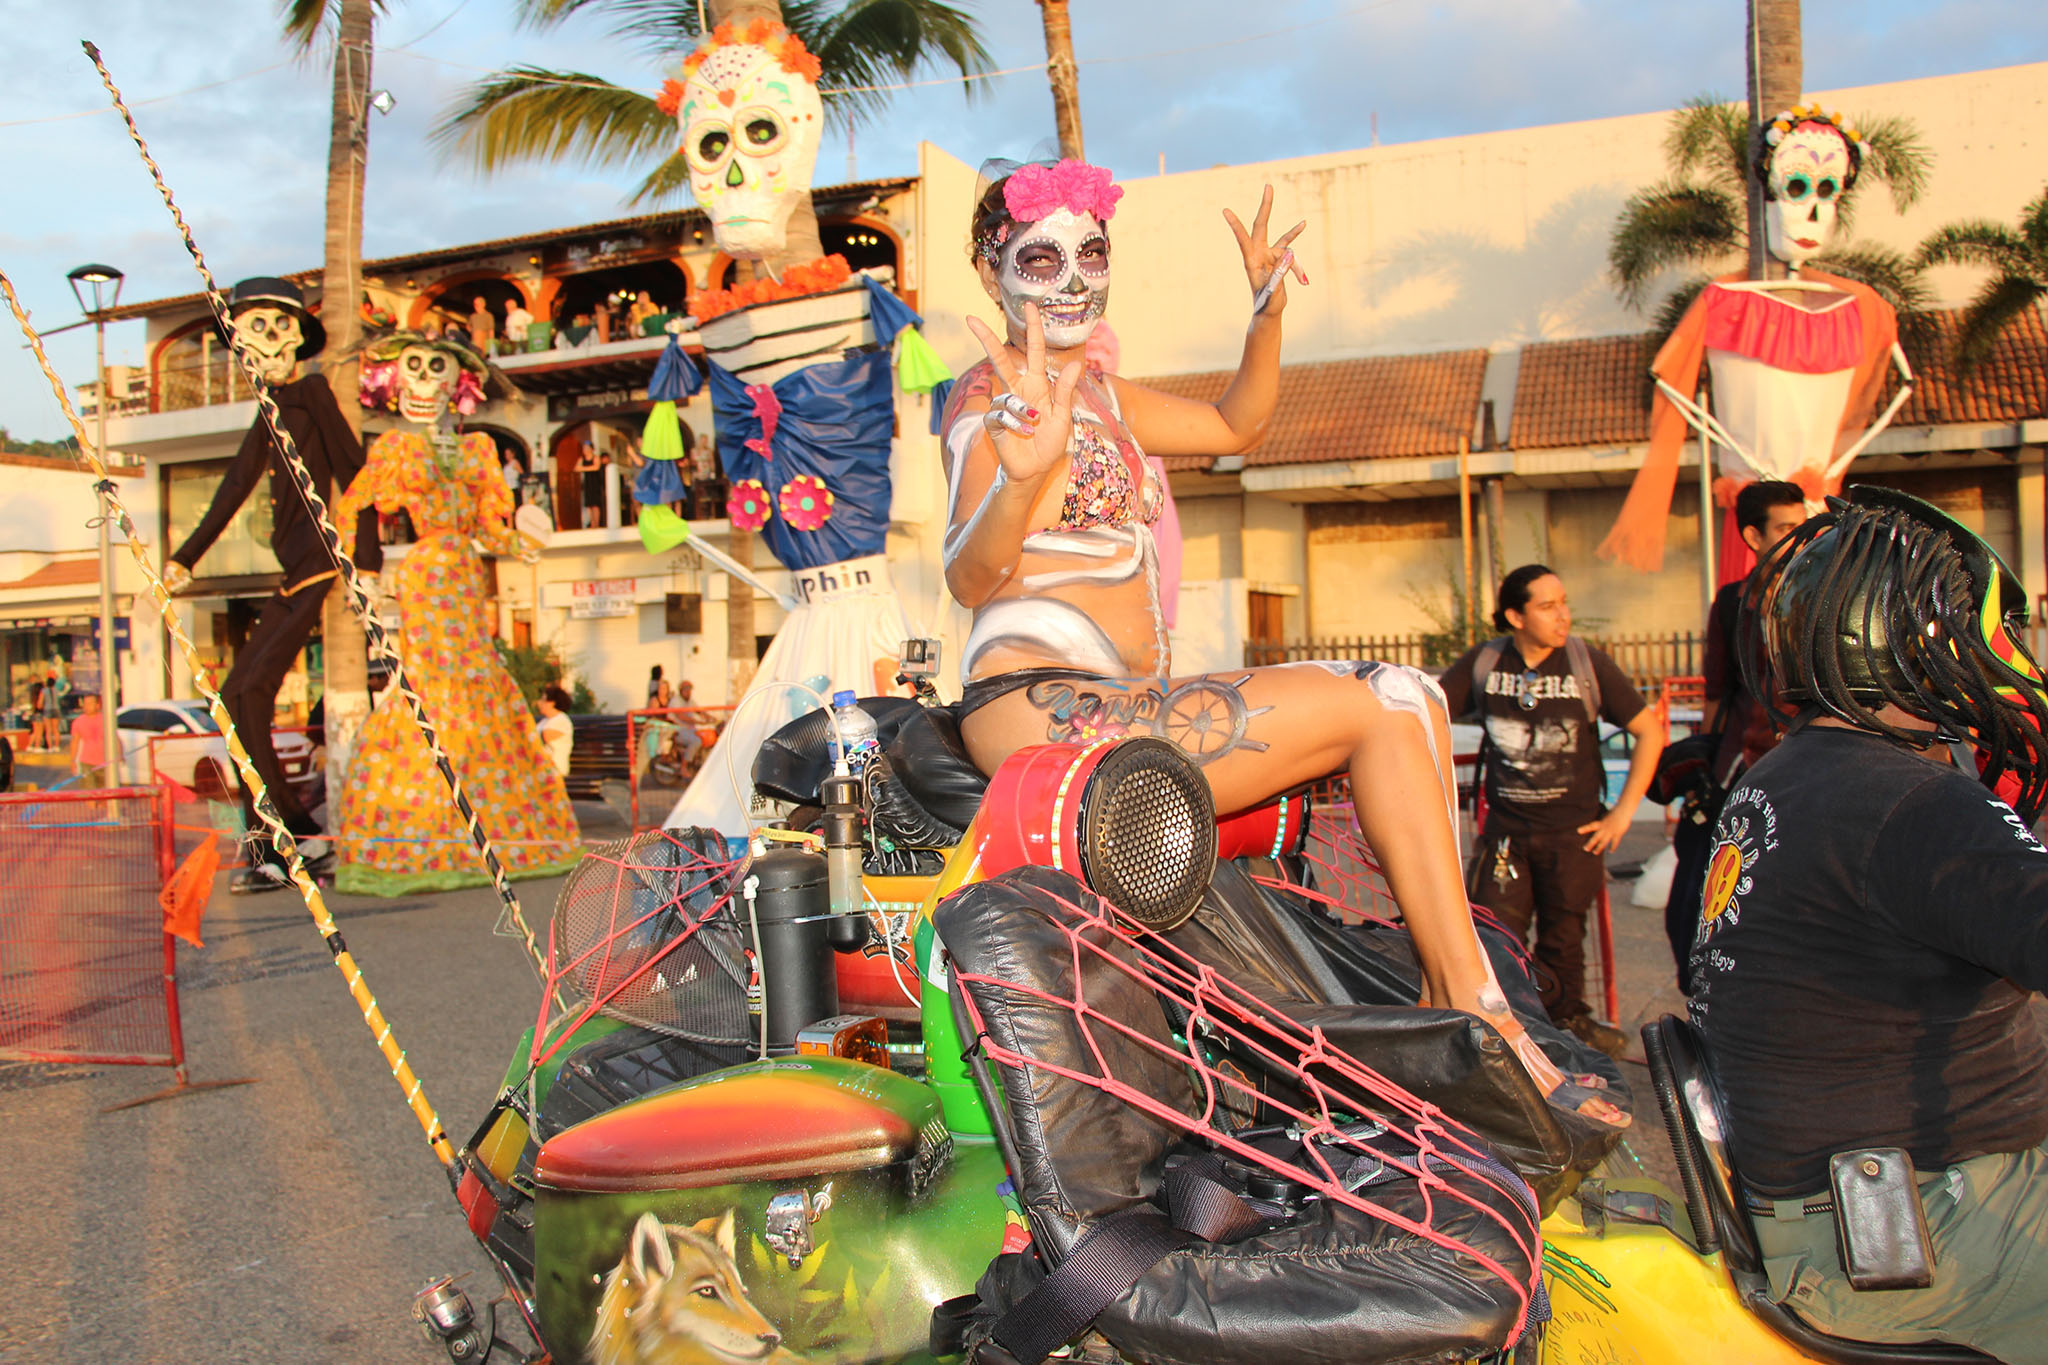 Puerto Vallarta closes successful Day of the Dead celebrations